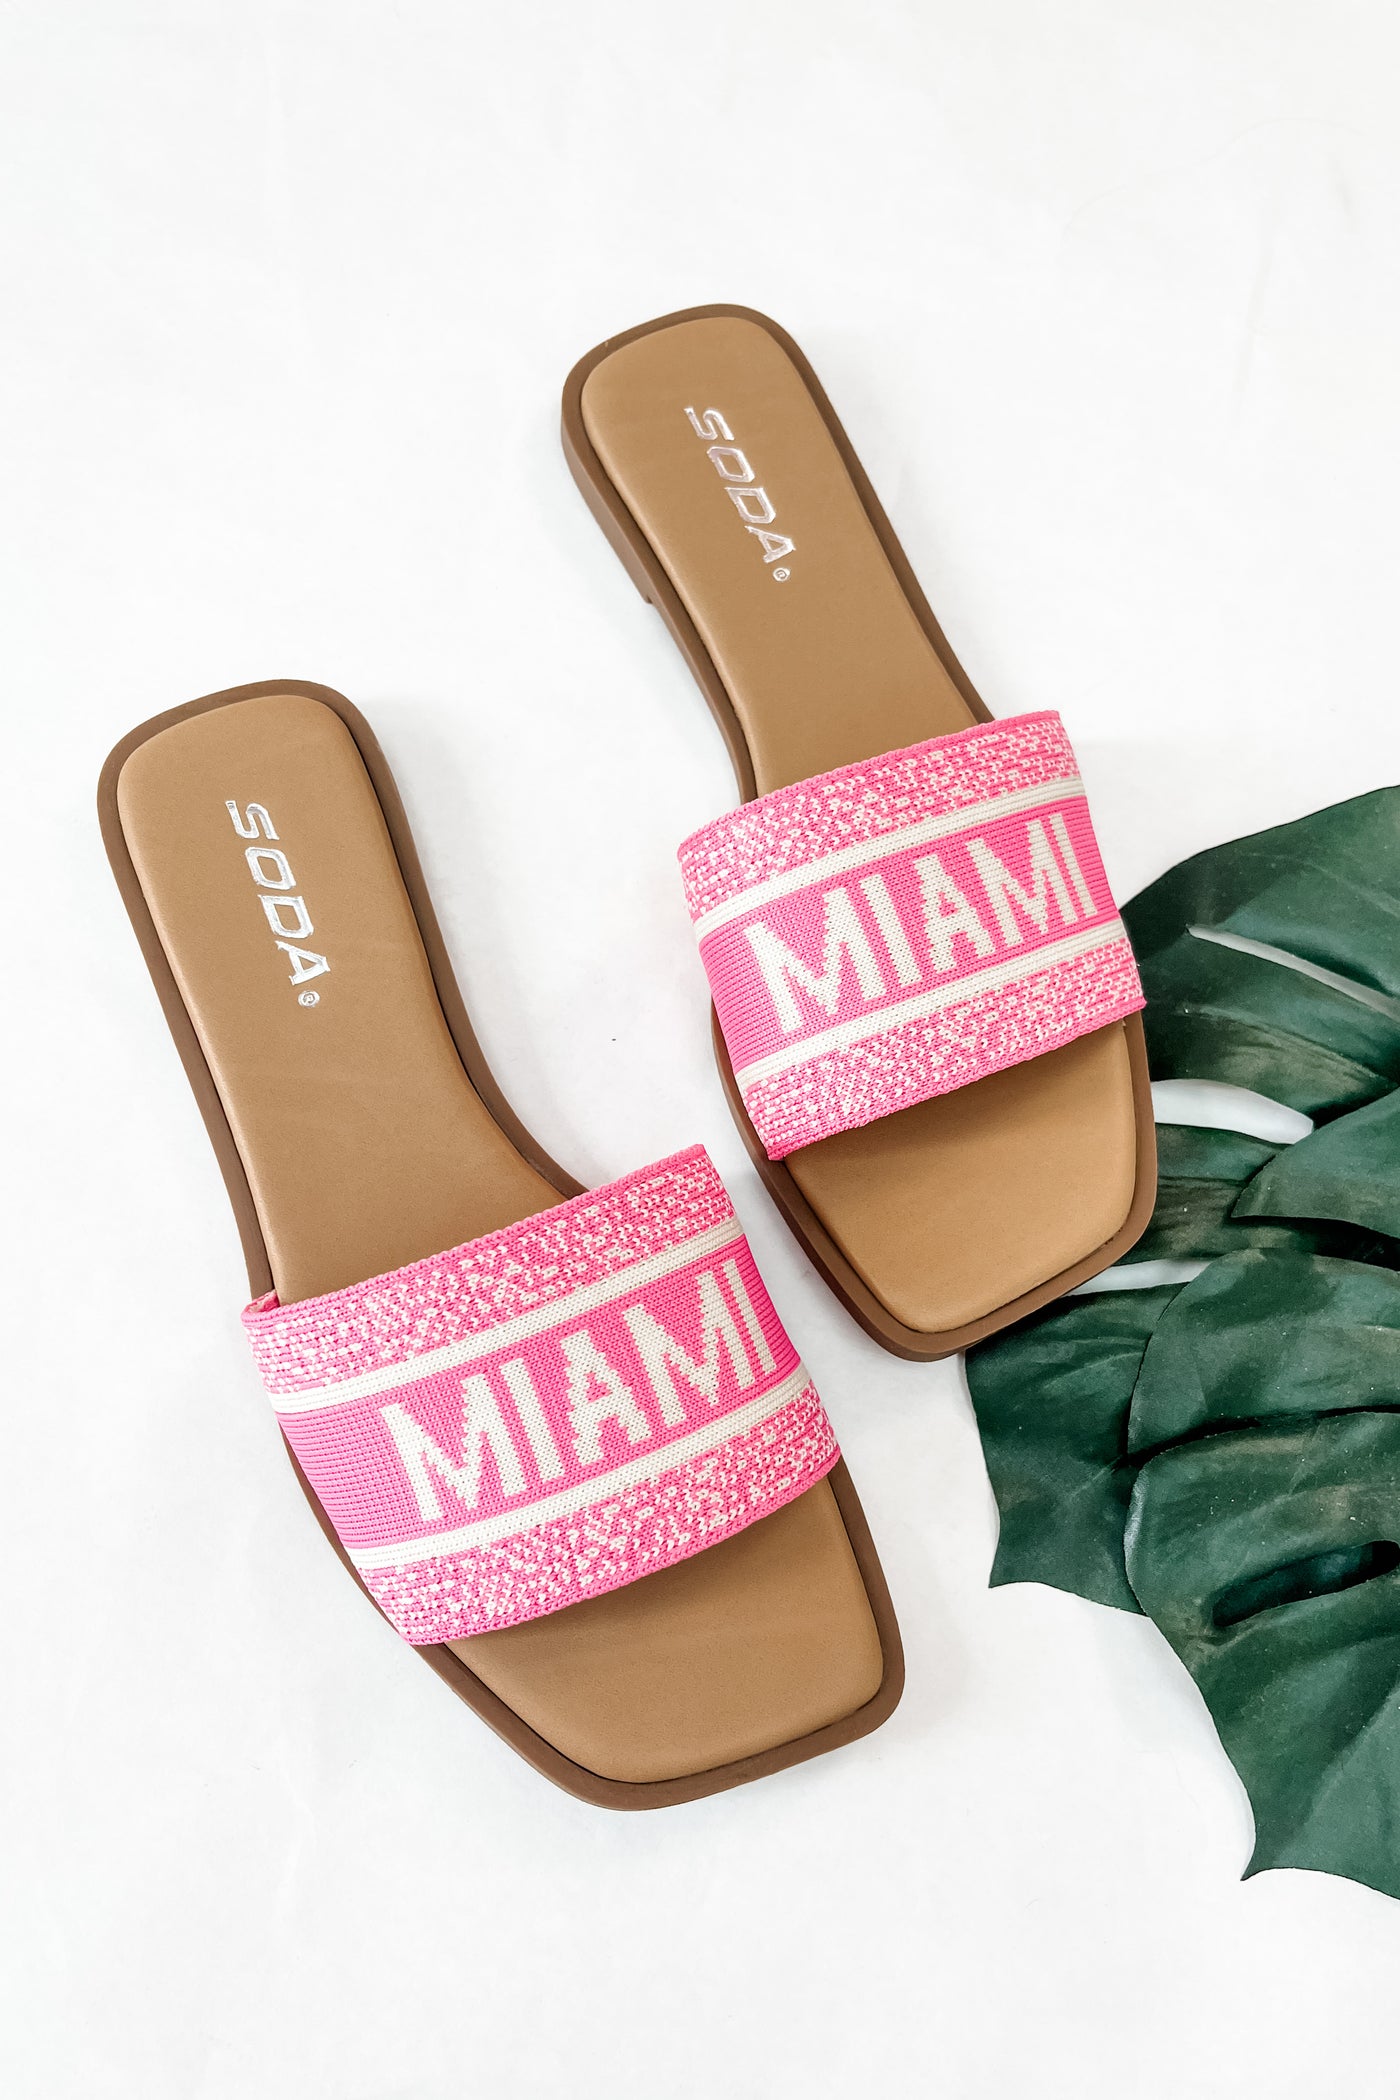 Miami Destination Sandal